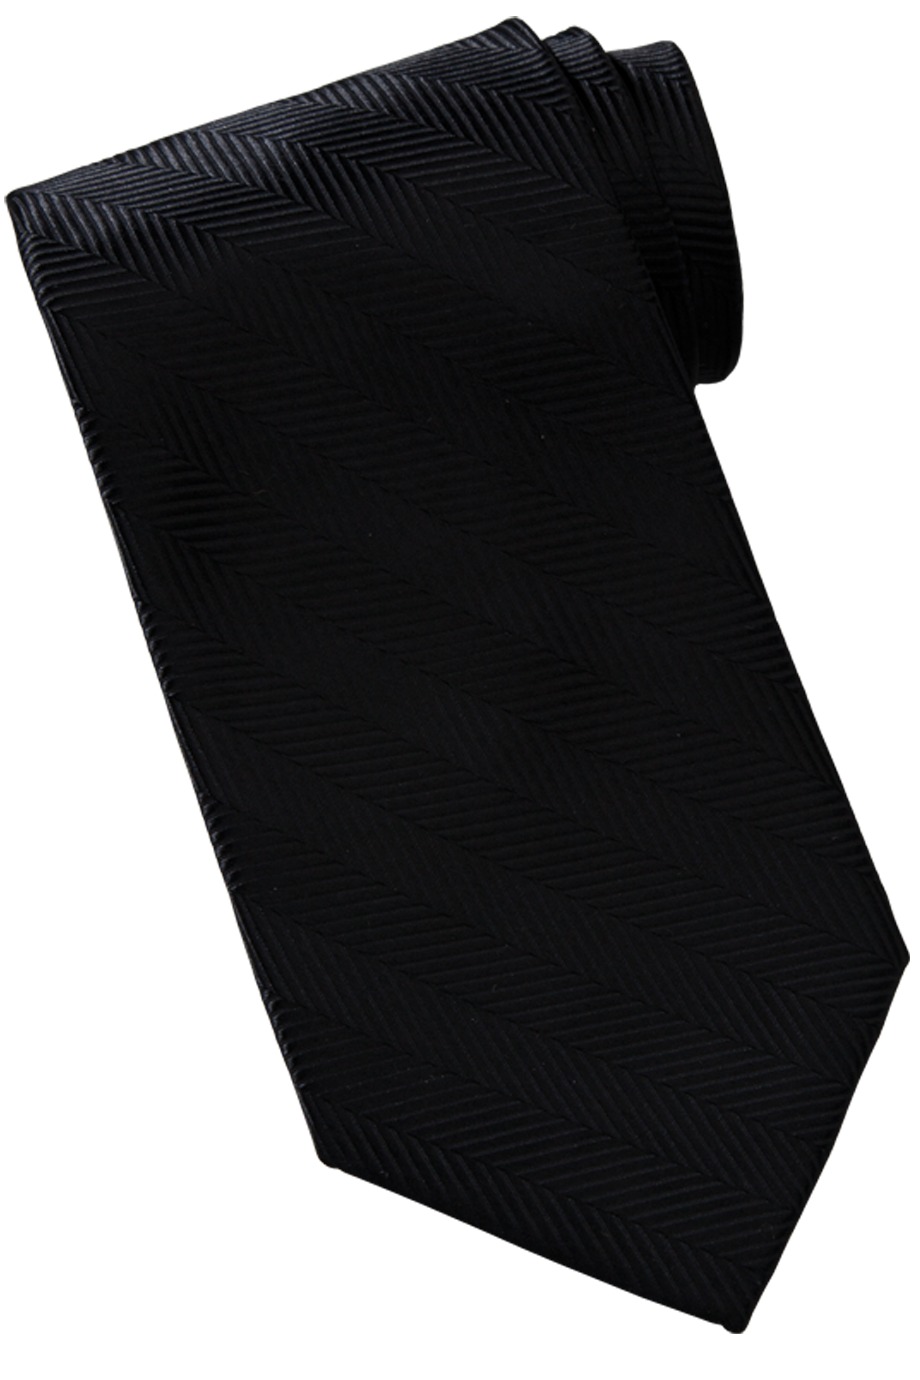 Edwards Garment HB00 - Herringbone Tie